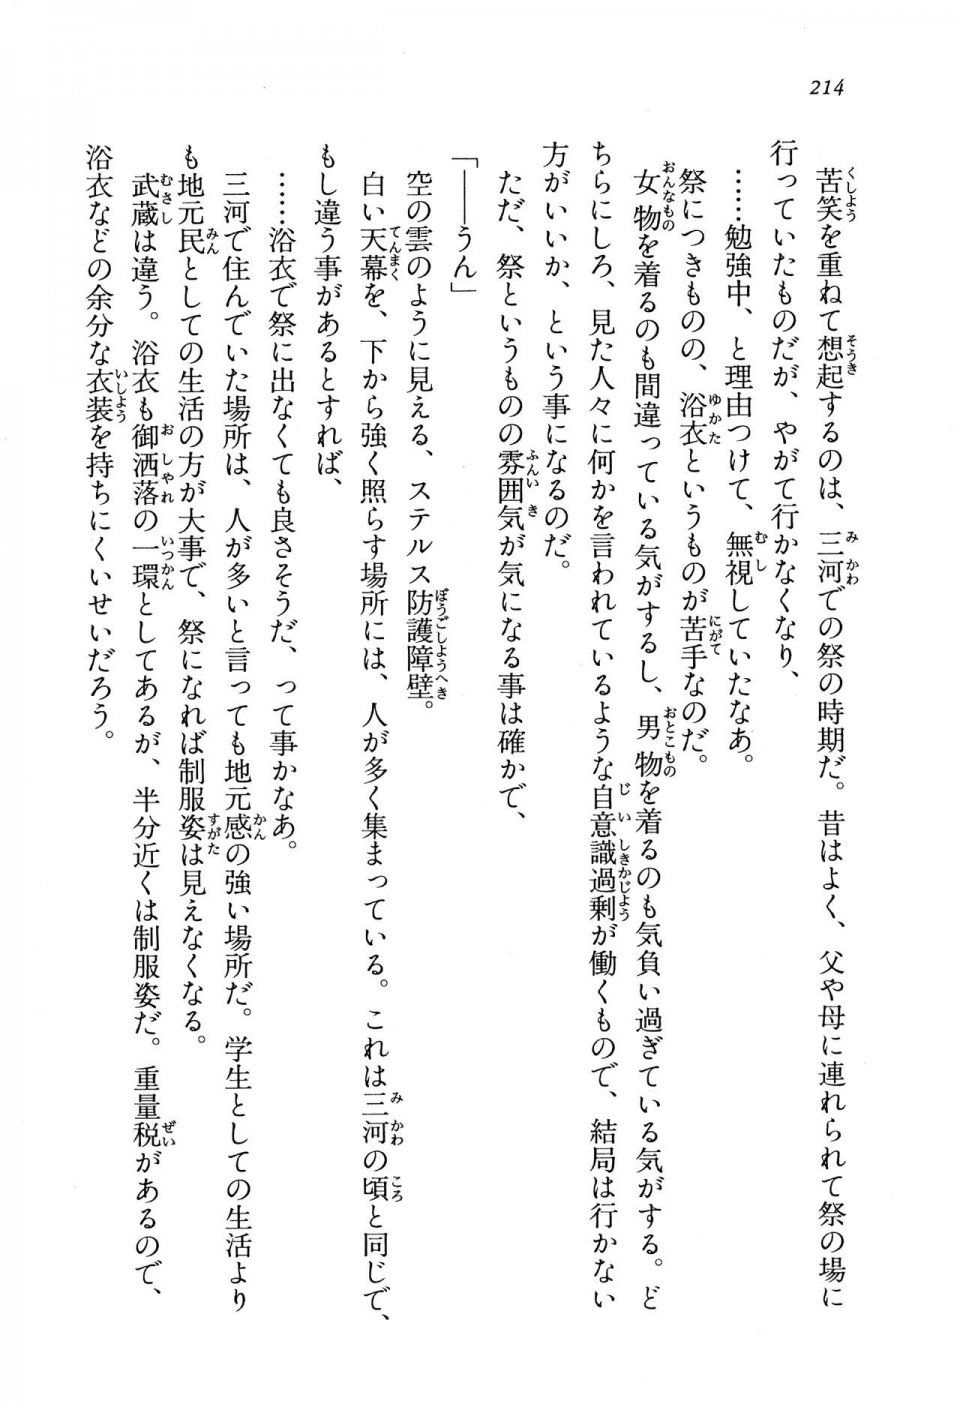 Kyoukai Senjou no Horizon BD Special Mininovel Vol 8(4B) - Photo #218